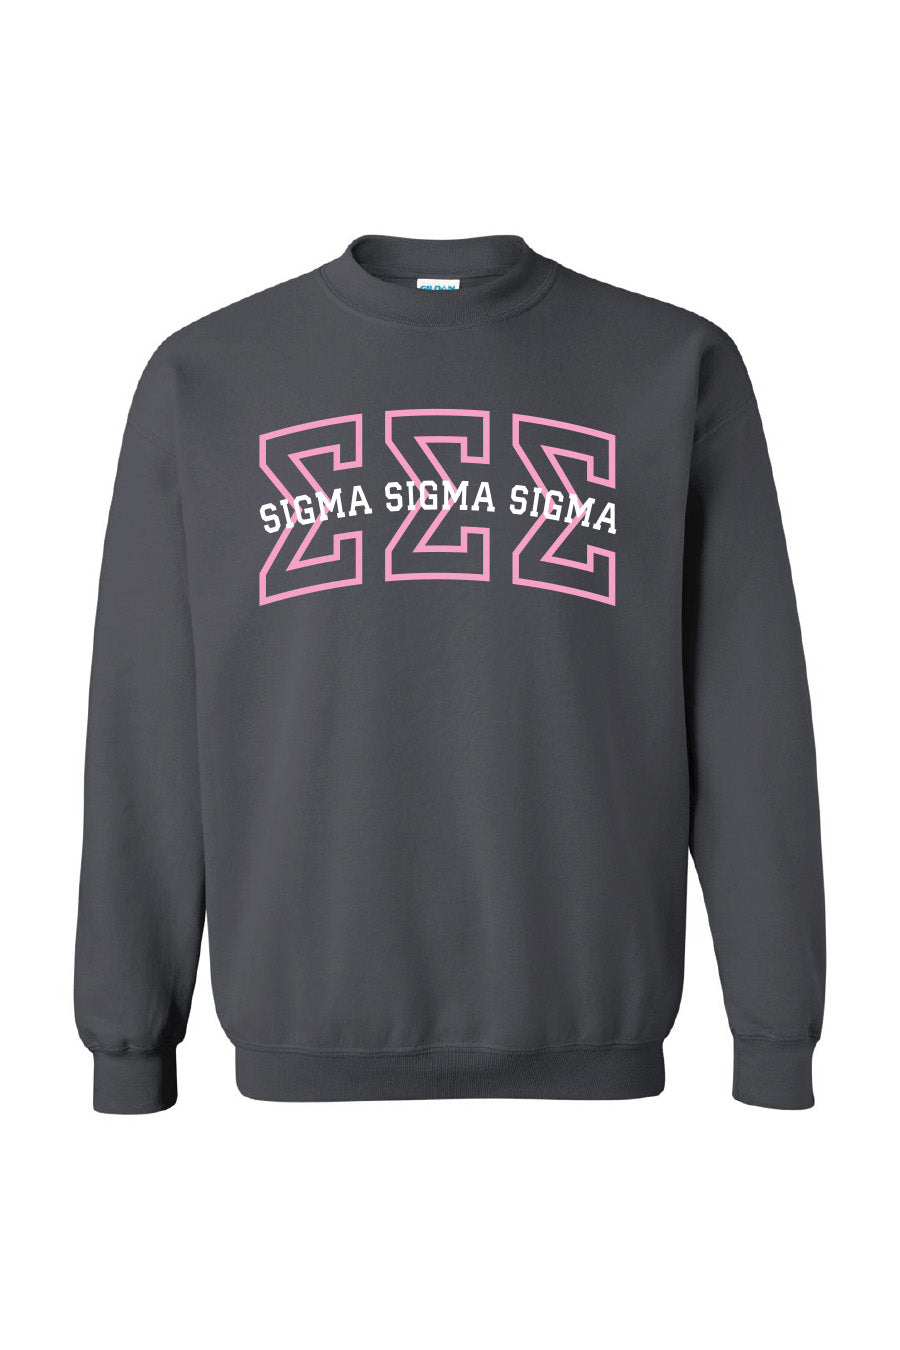 Pink Tri Sigma Crew Sweatshirt